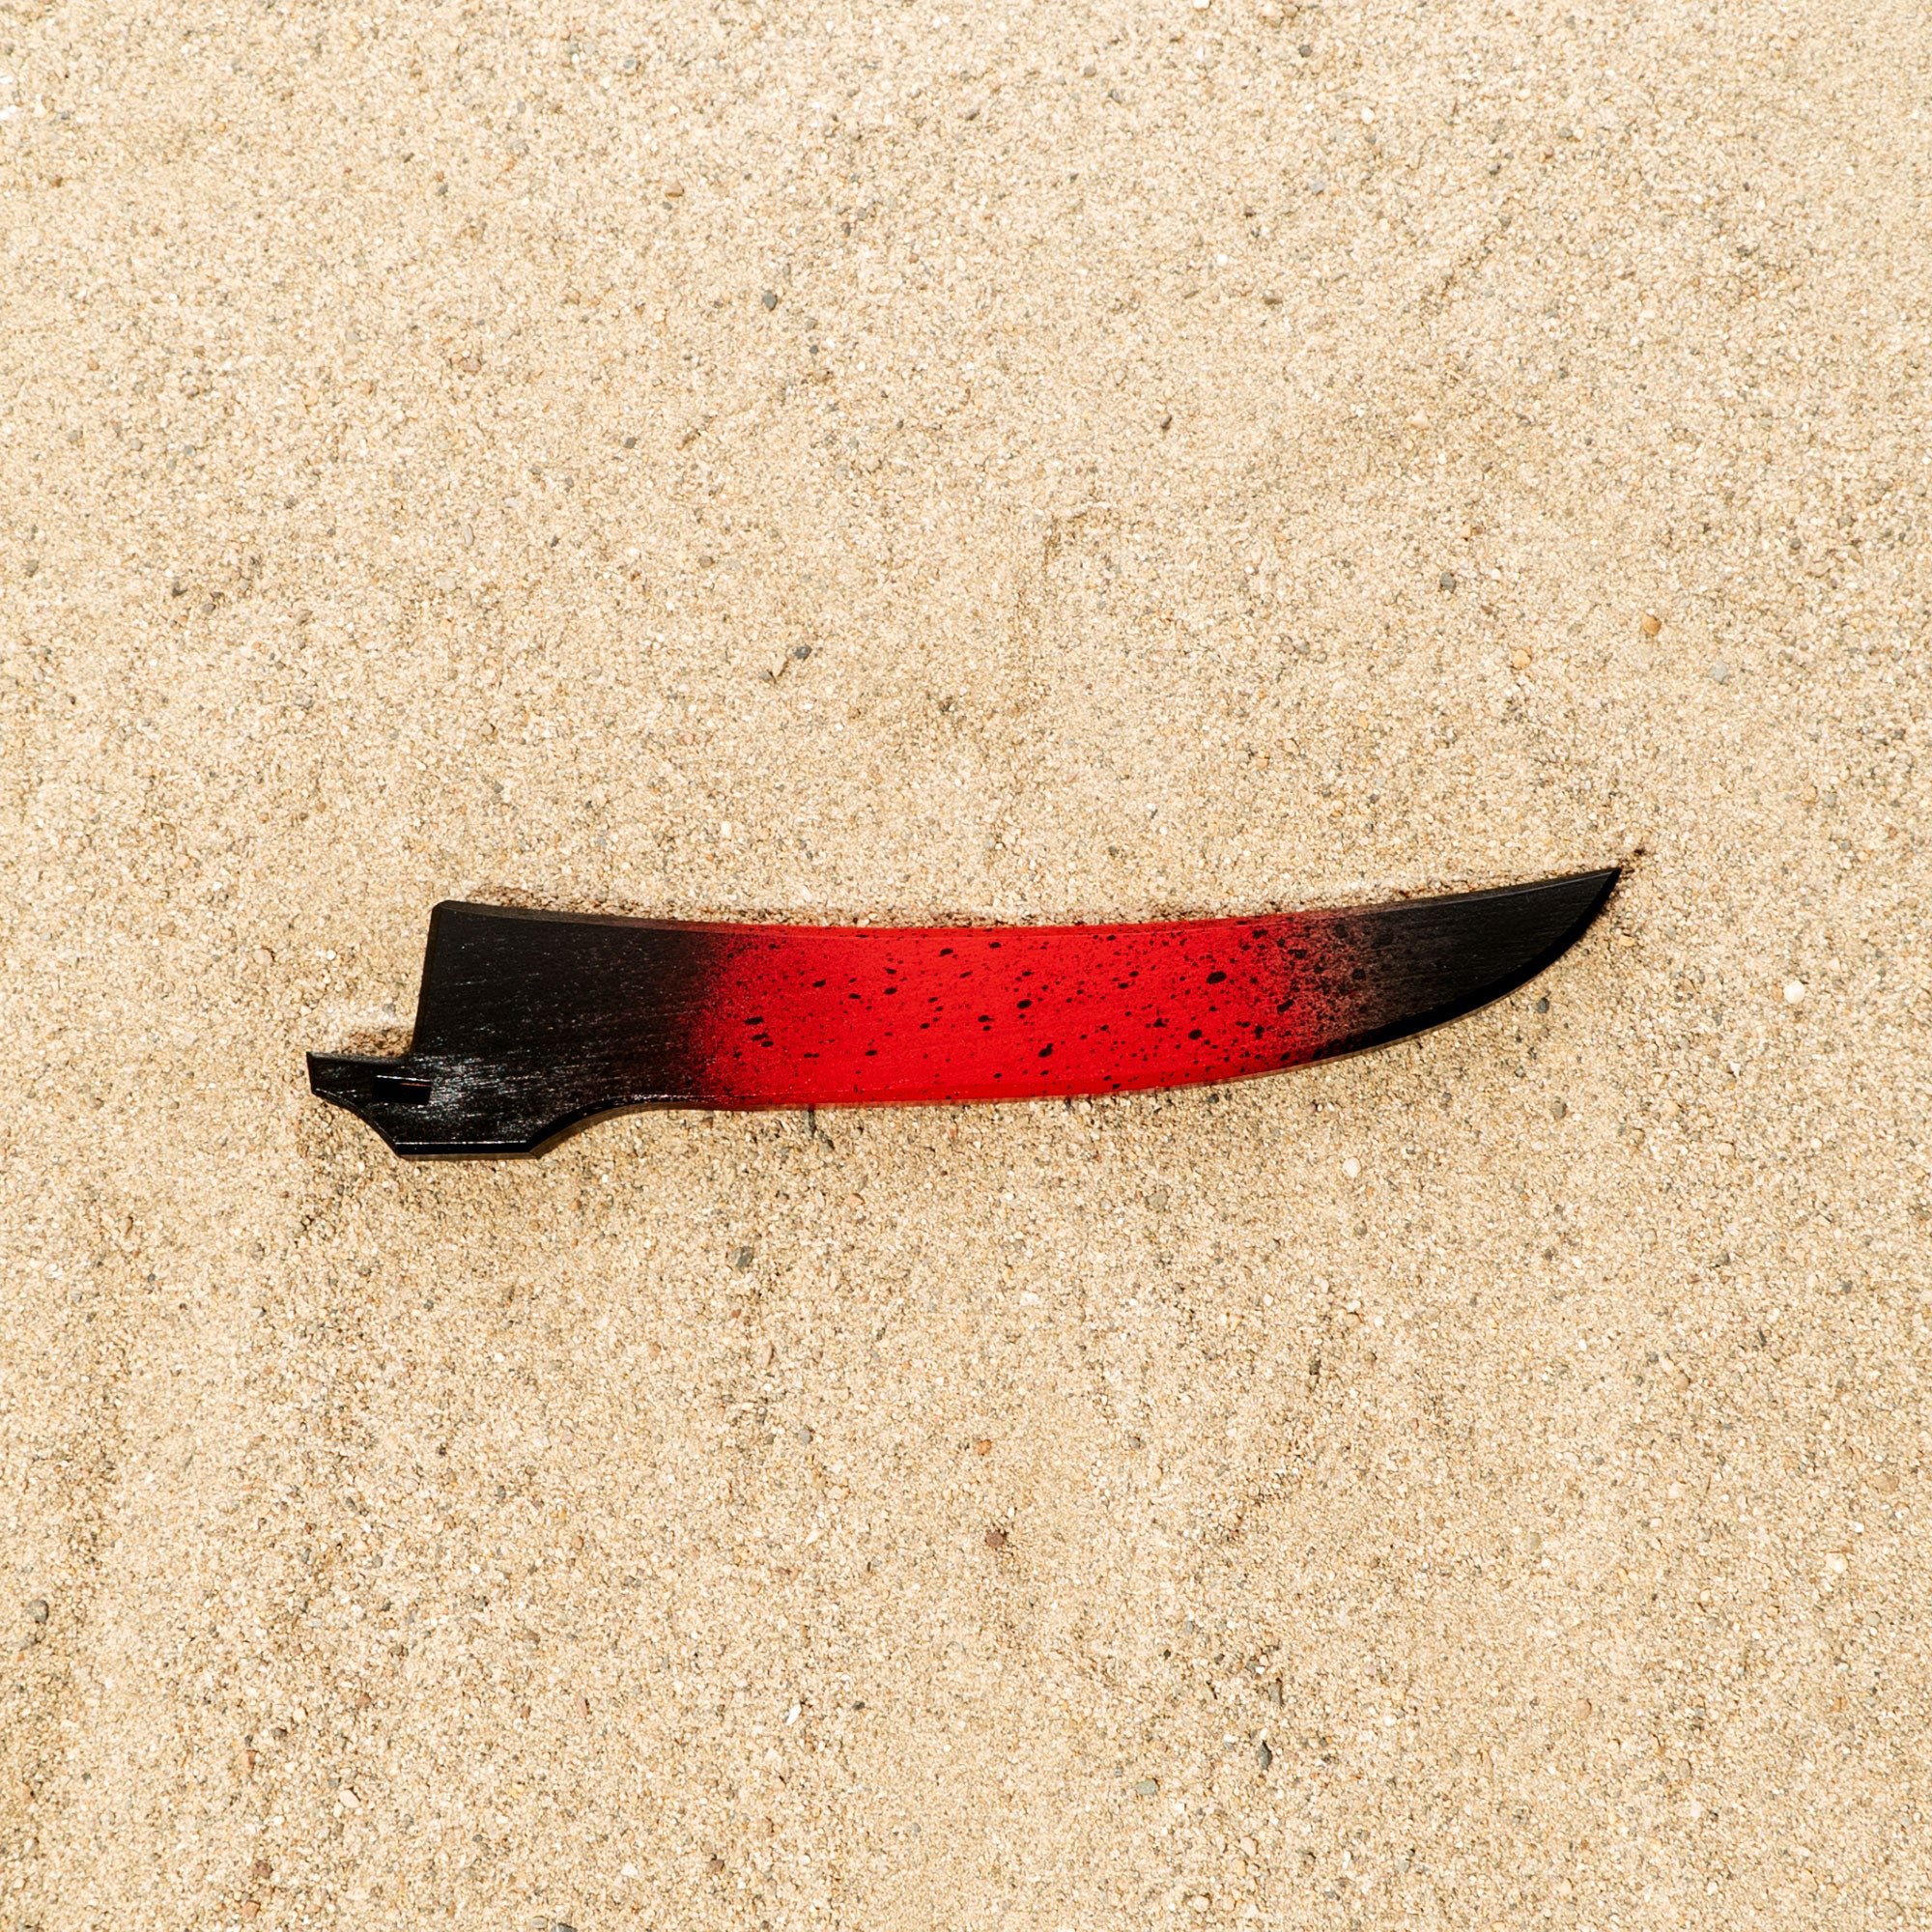 Red and black wood saya knife sheath for Town Cutler Baja curved boning knife.